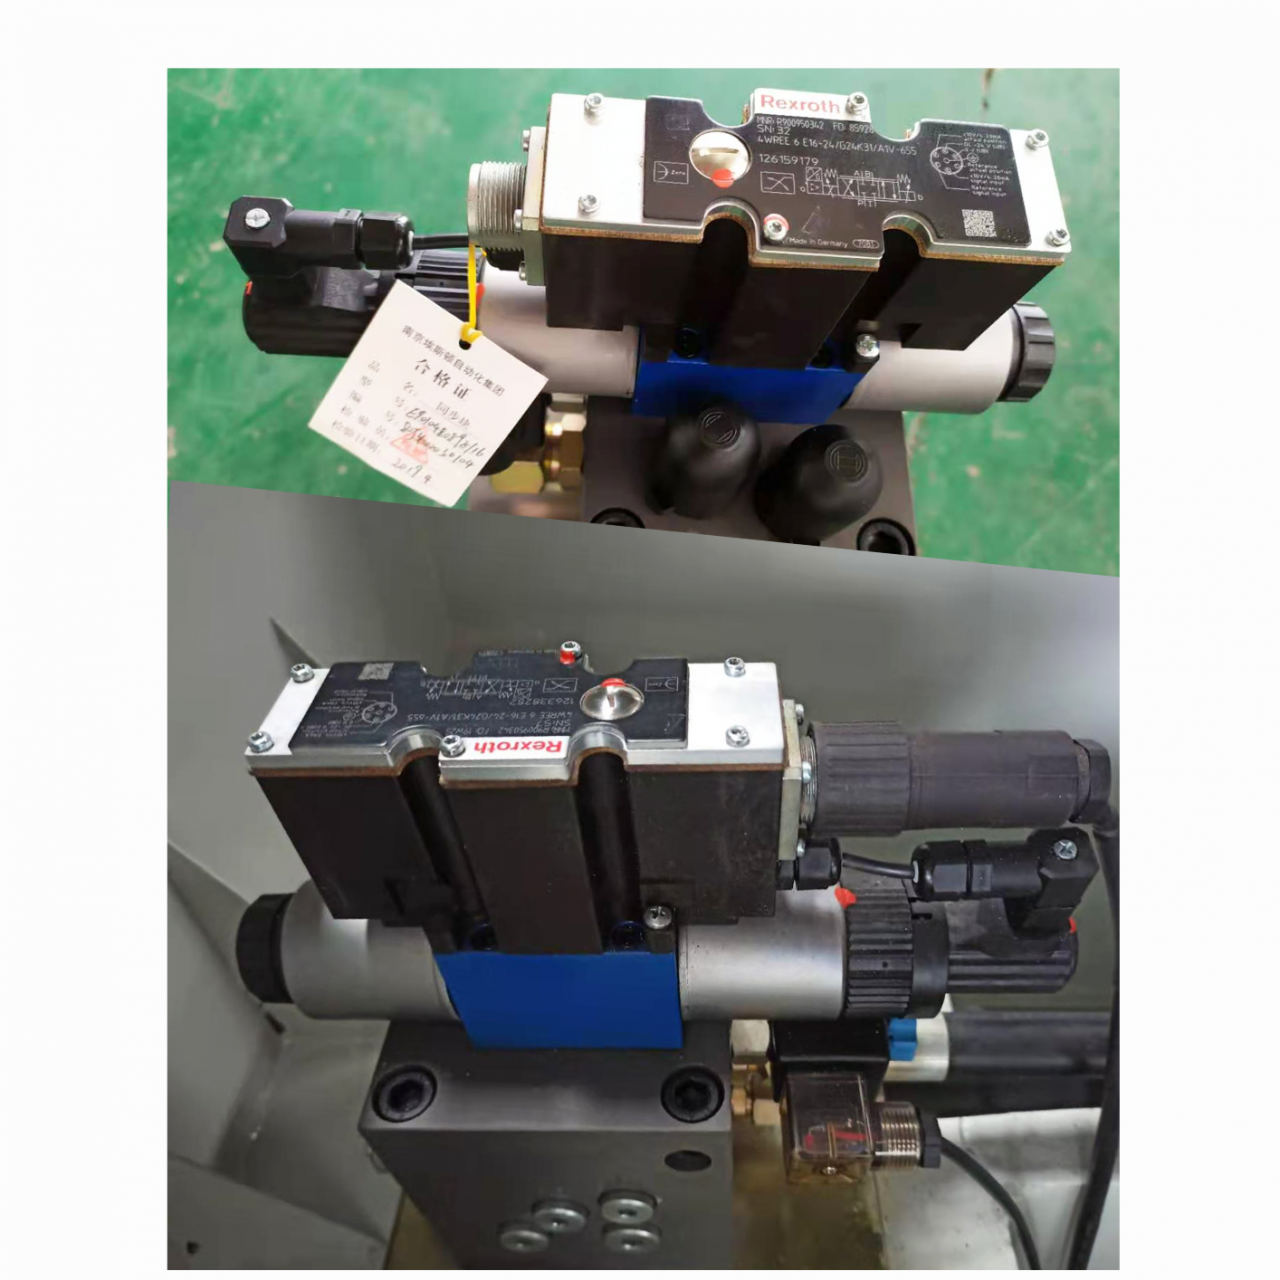 Da-66t 控制器数控液压机刹车价格与 3d 触摸屏系统